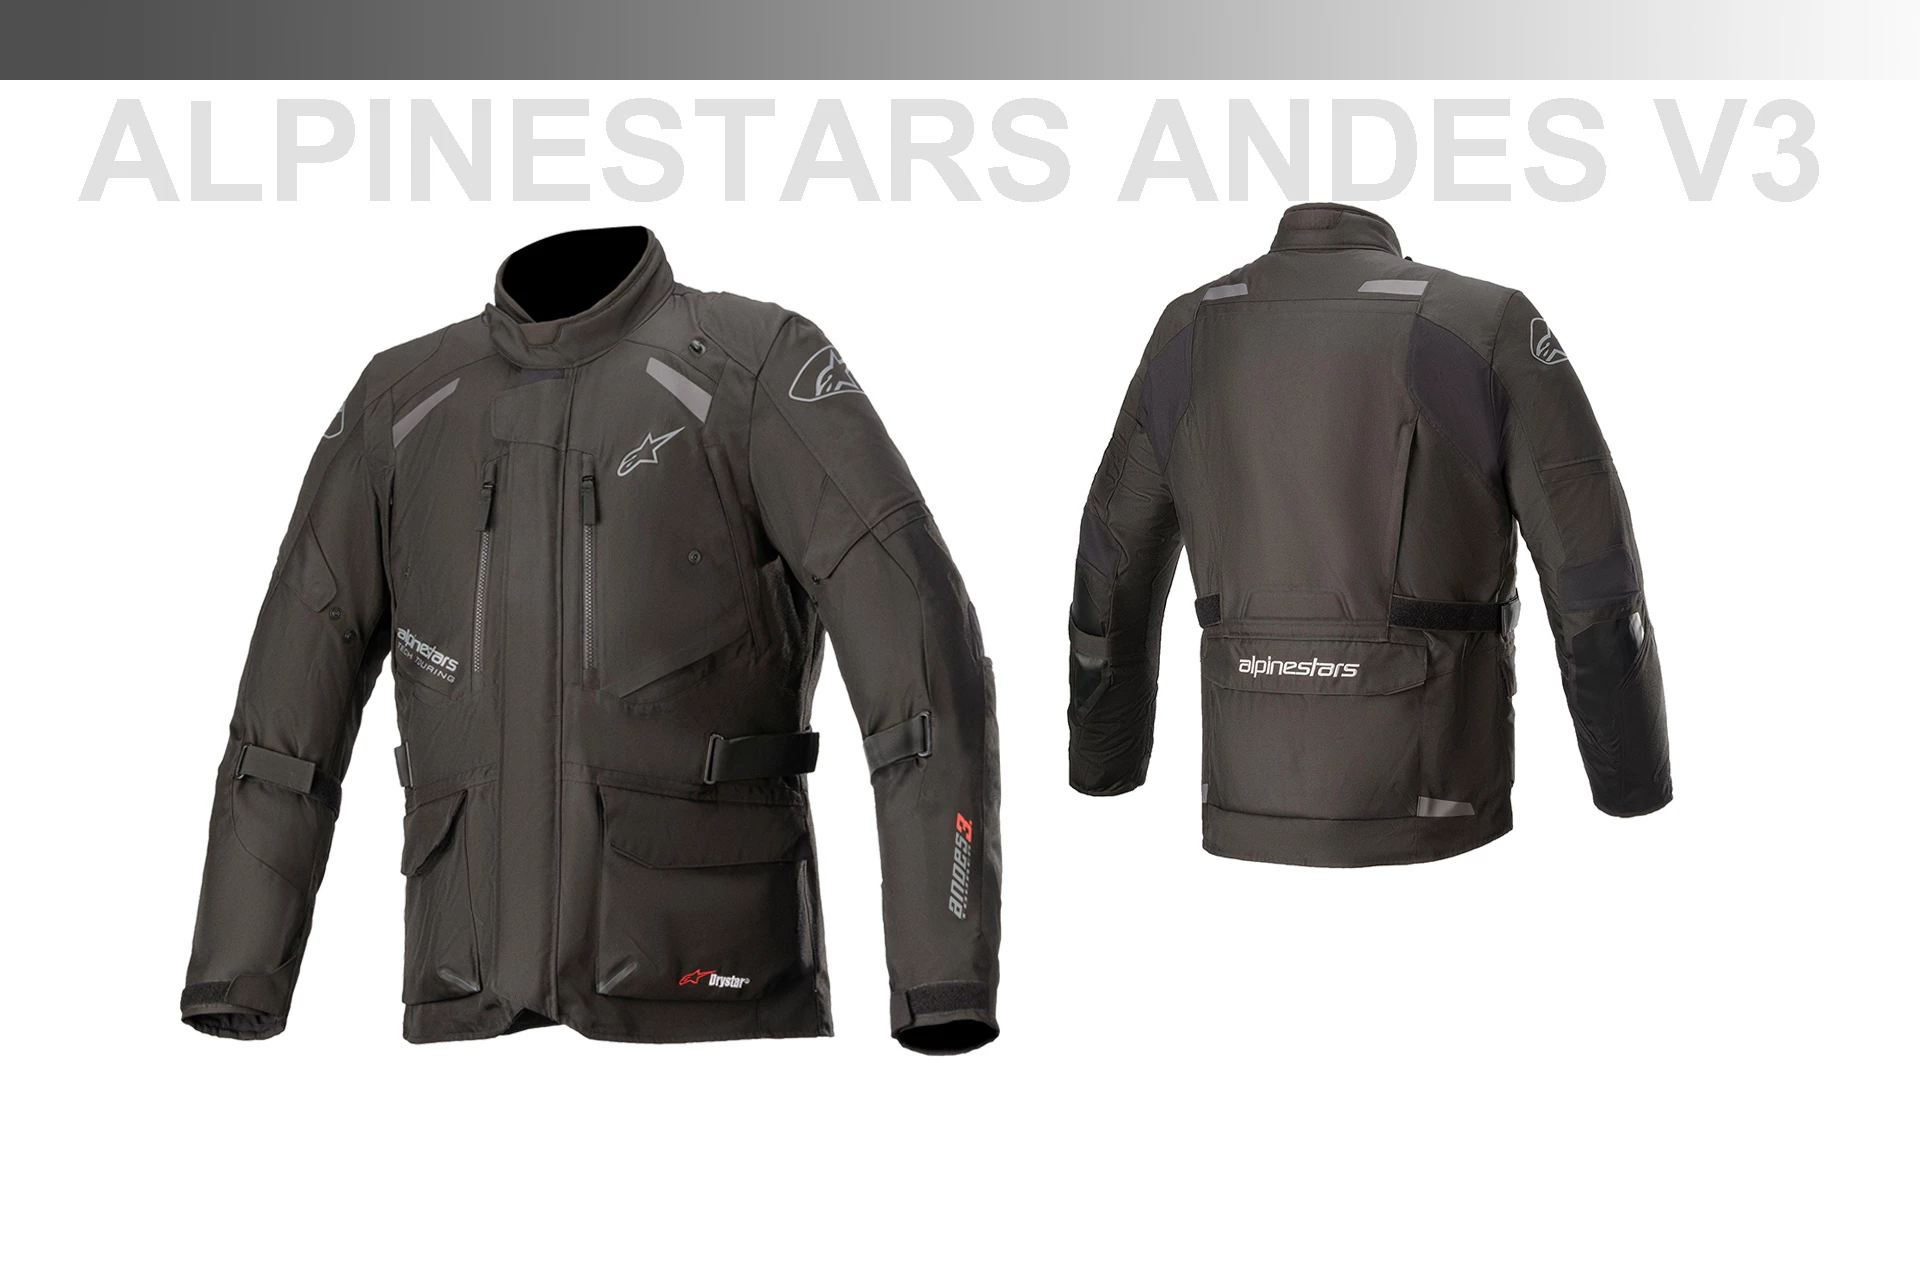 Áo Giáp Touring Alpinestars Andes V3